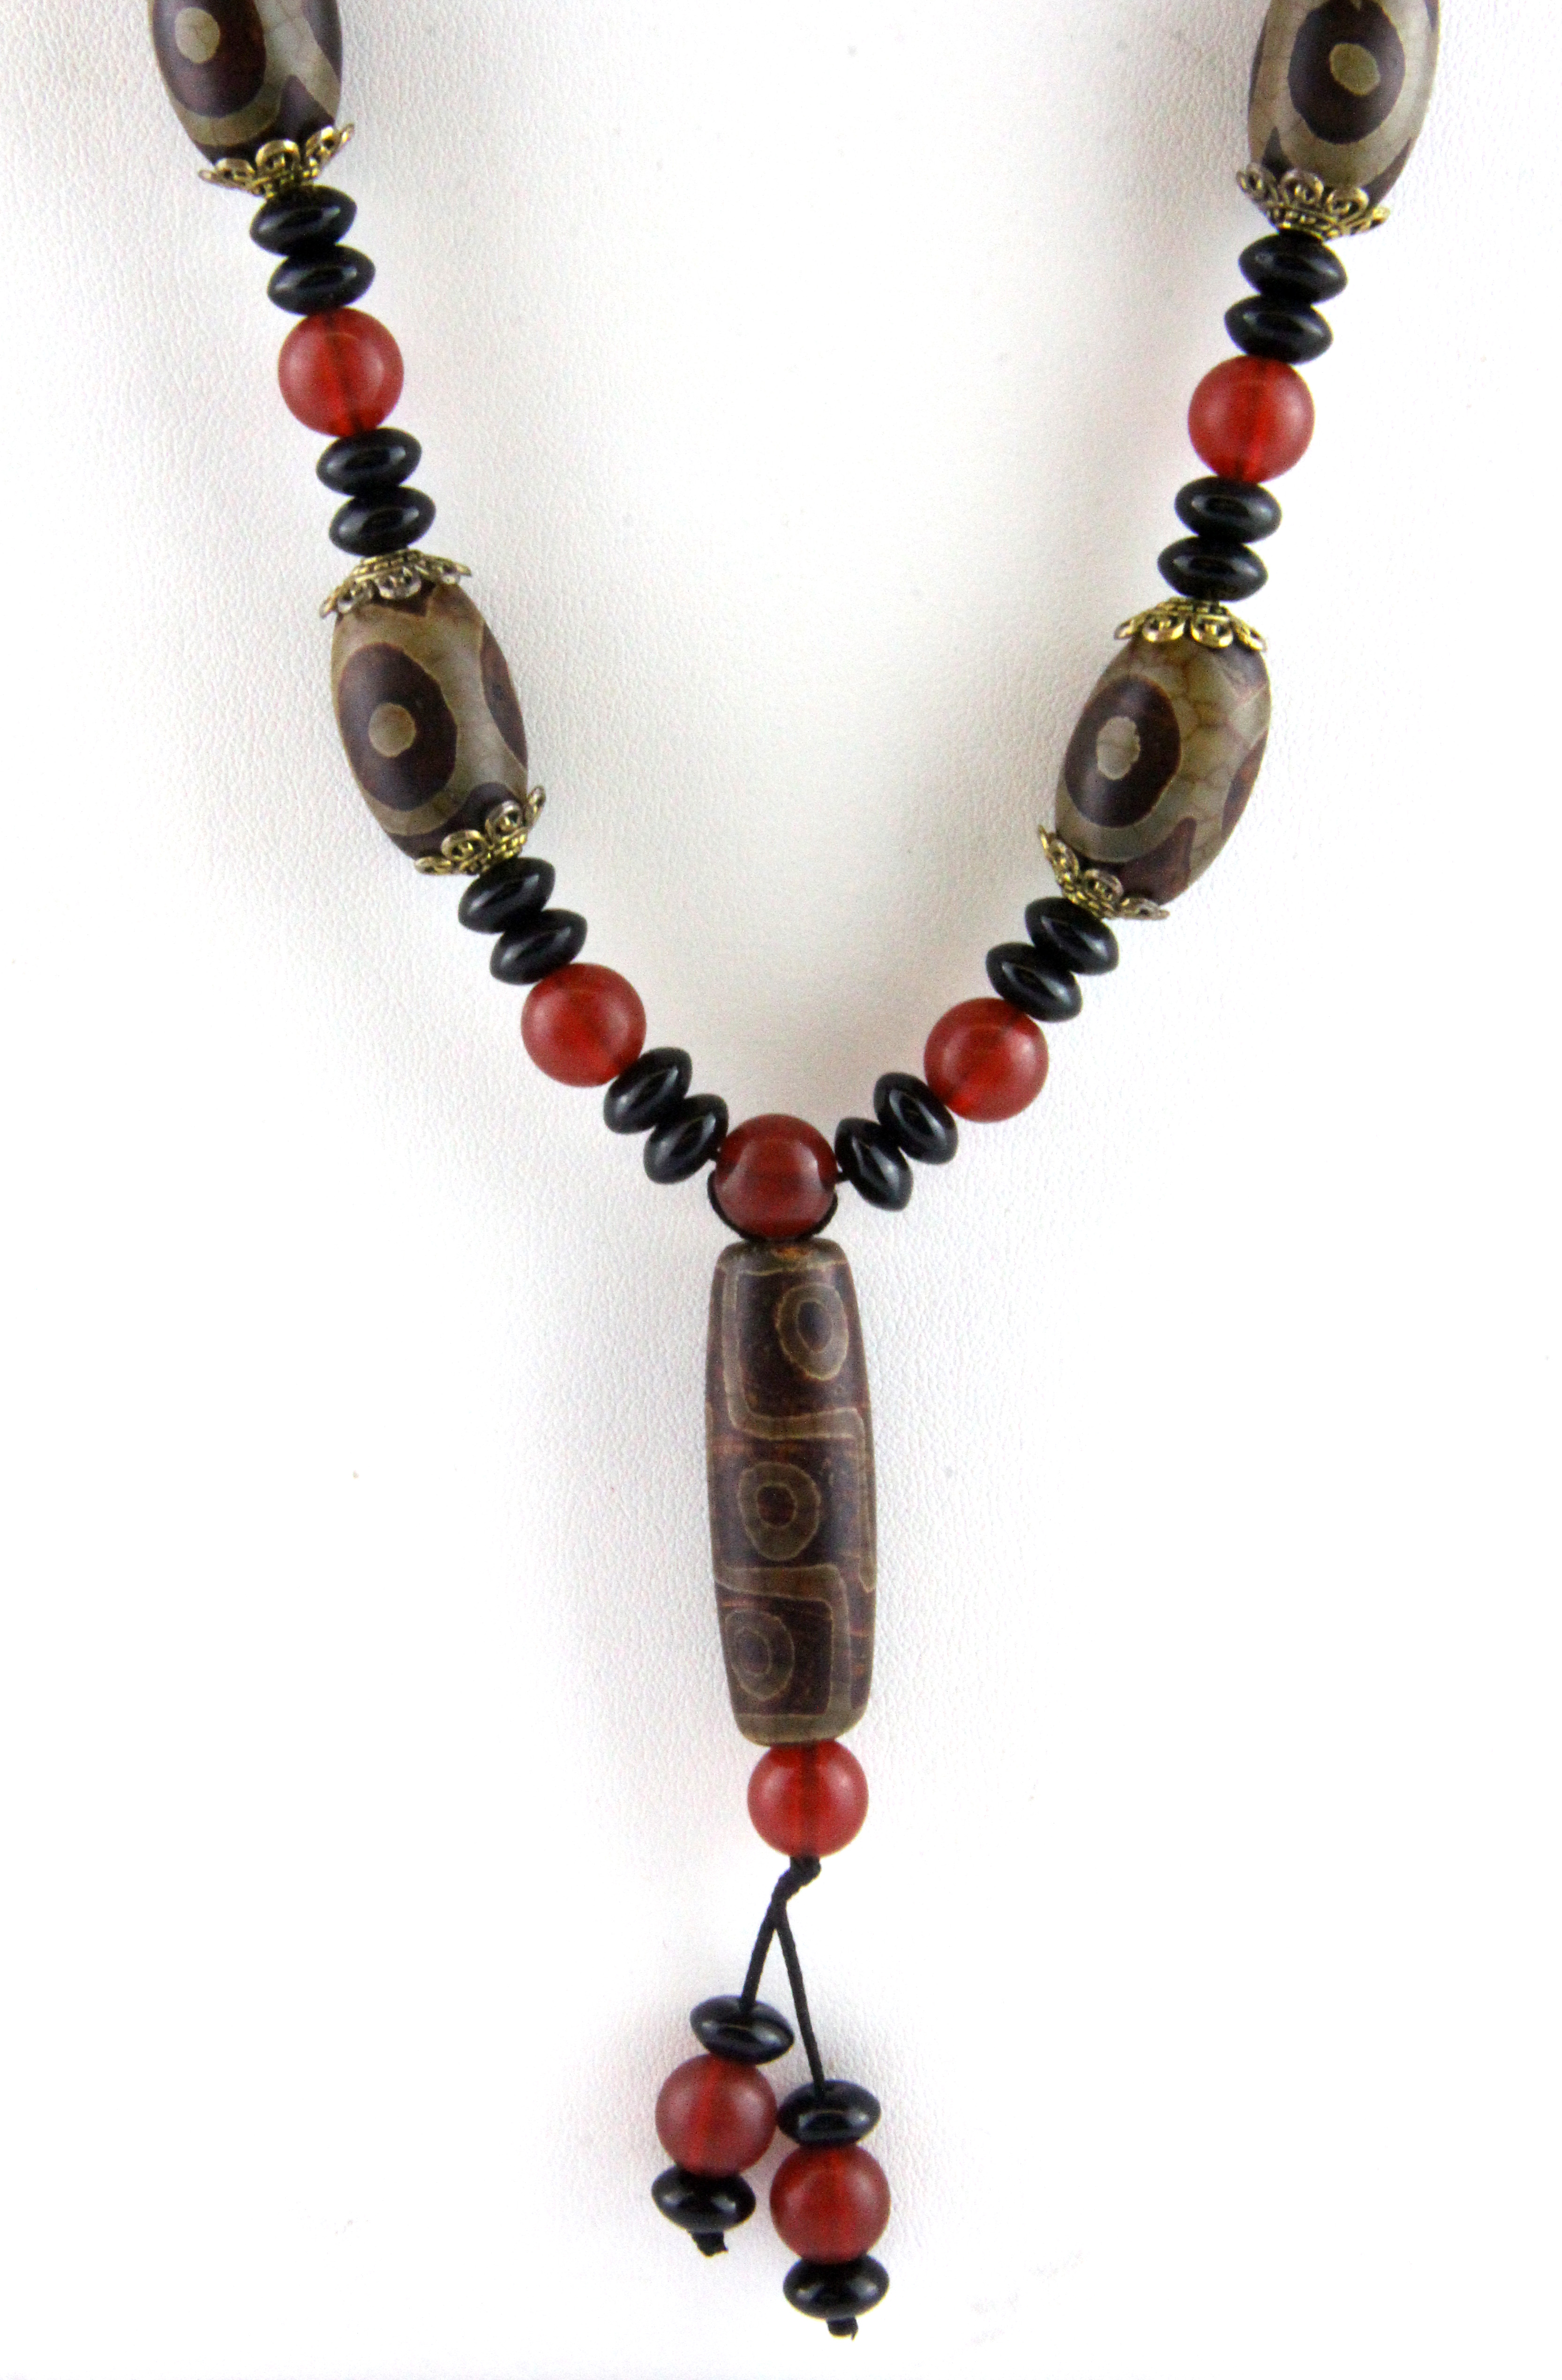 necklace of prayer beads